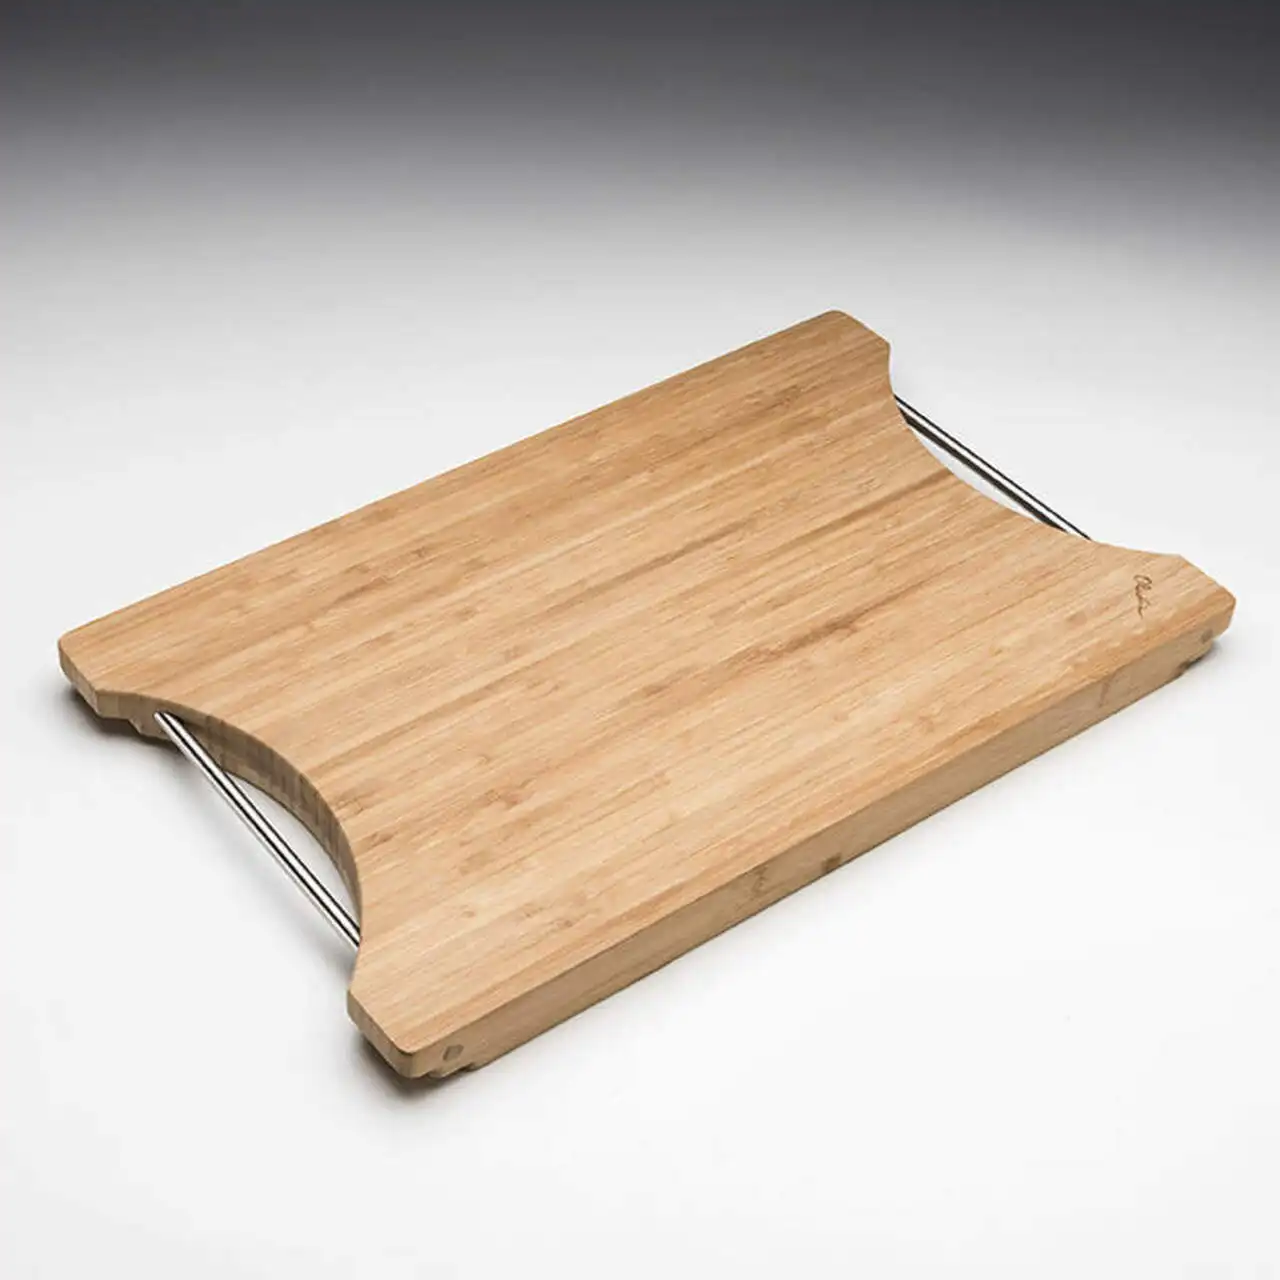 Tabla de madera para picar, tabla de cortar de madera, de bambú, de Acacia, Santorini